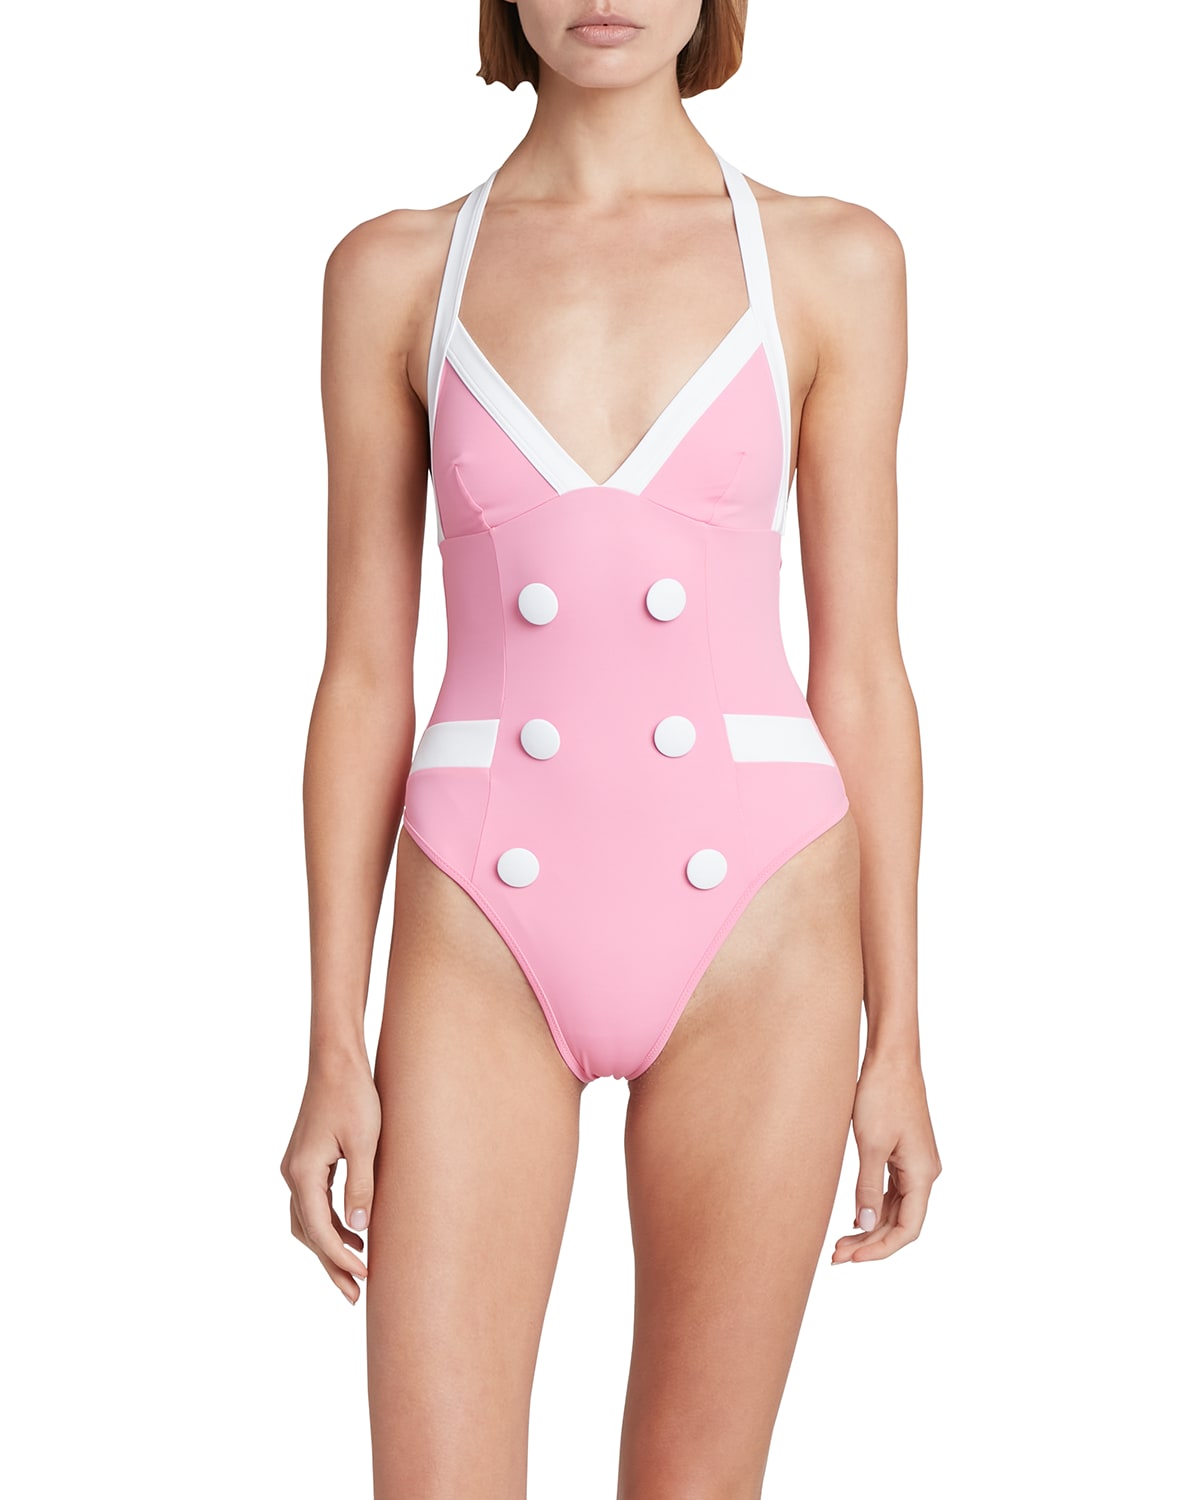 Balmain x Barbie 6-Button Halter One-Piece Swimsuit